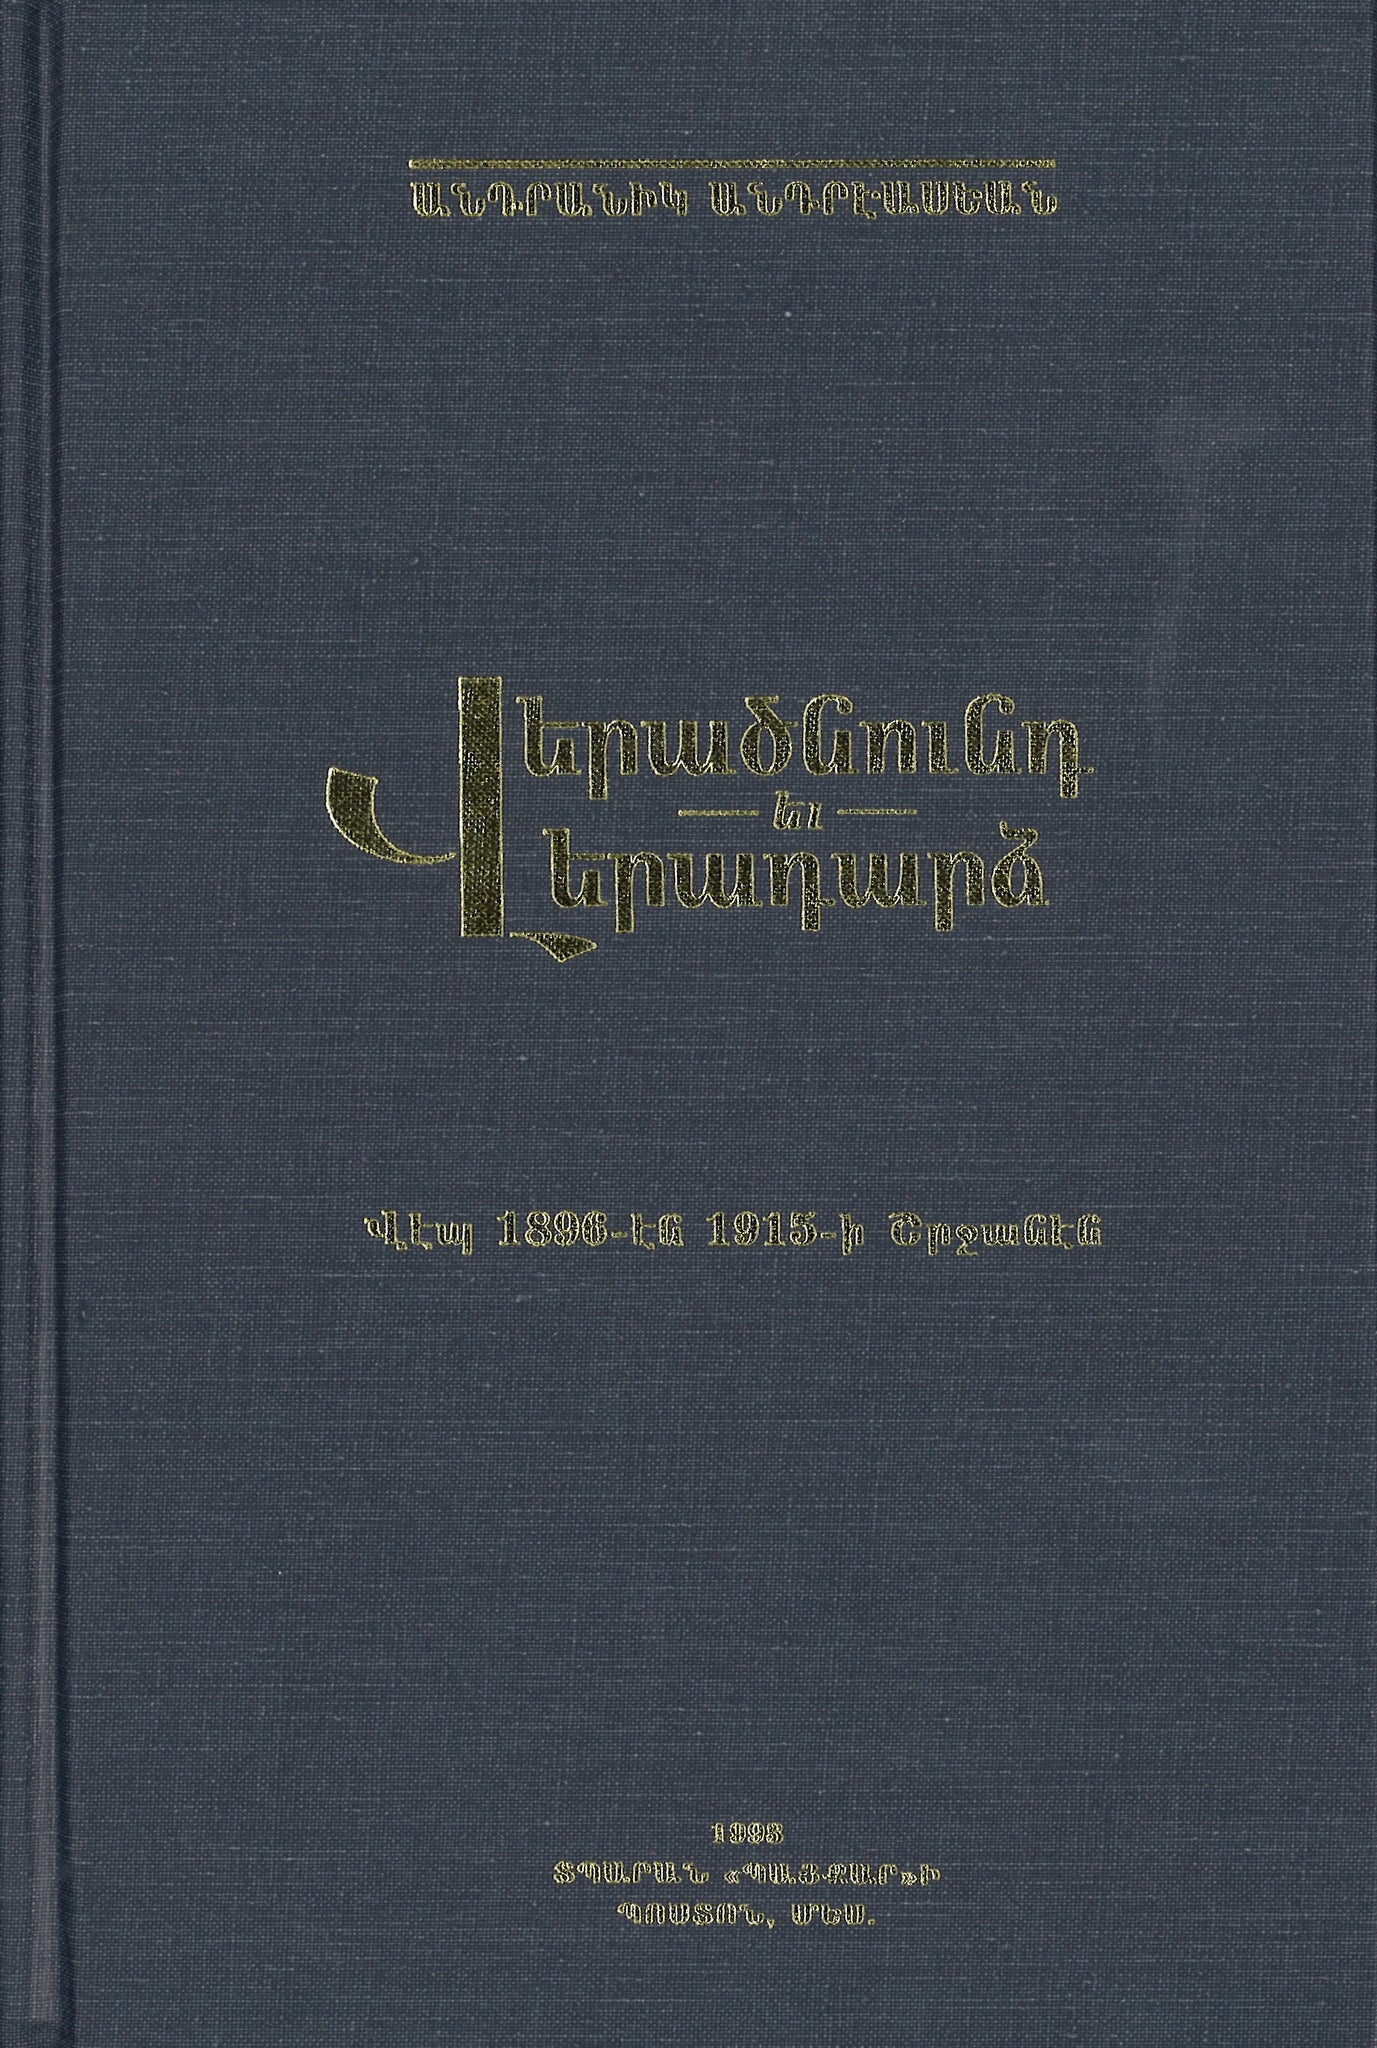 VERATSNUND YEV VERADARTS 1896-1915